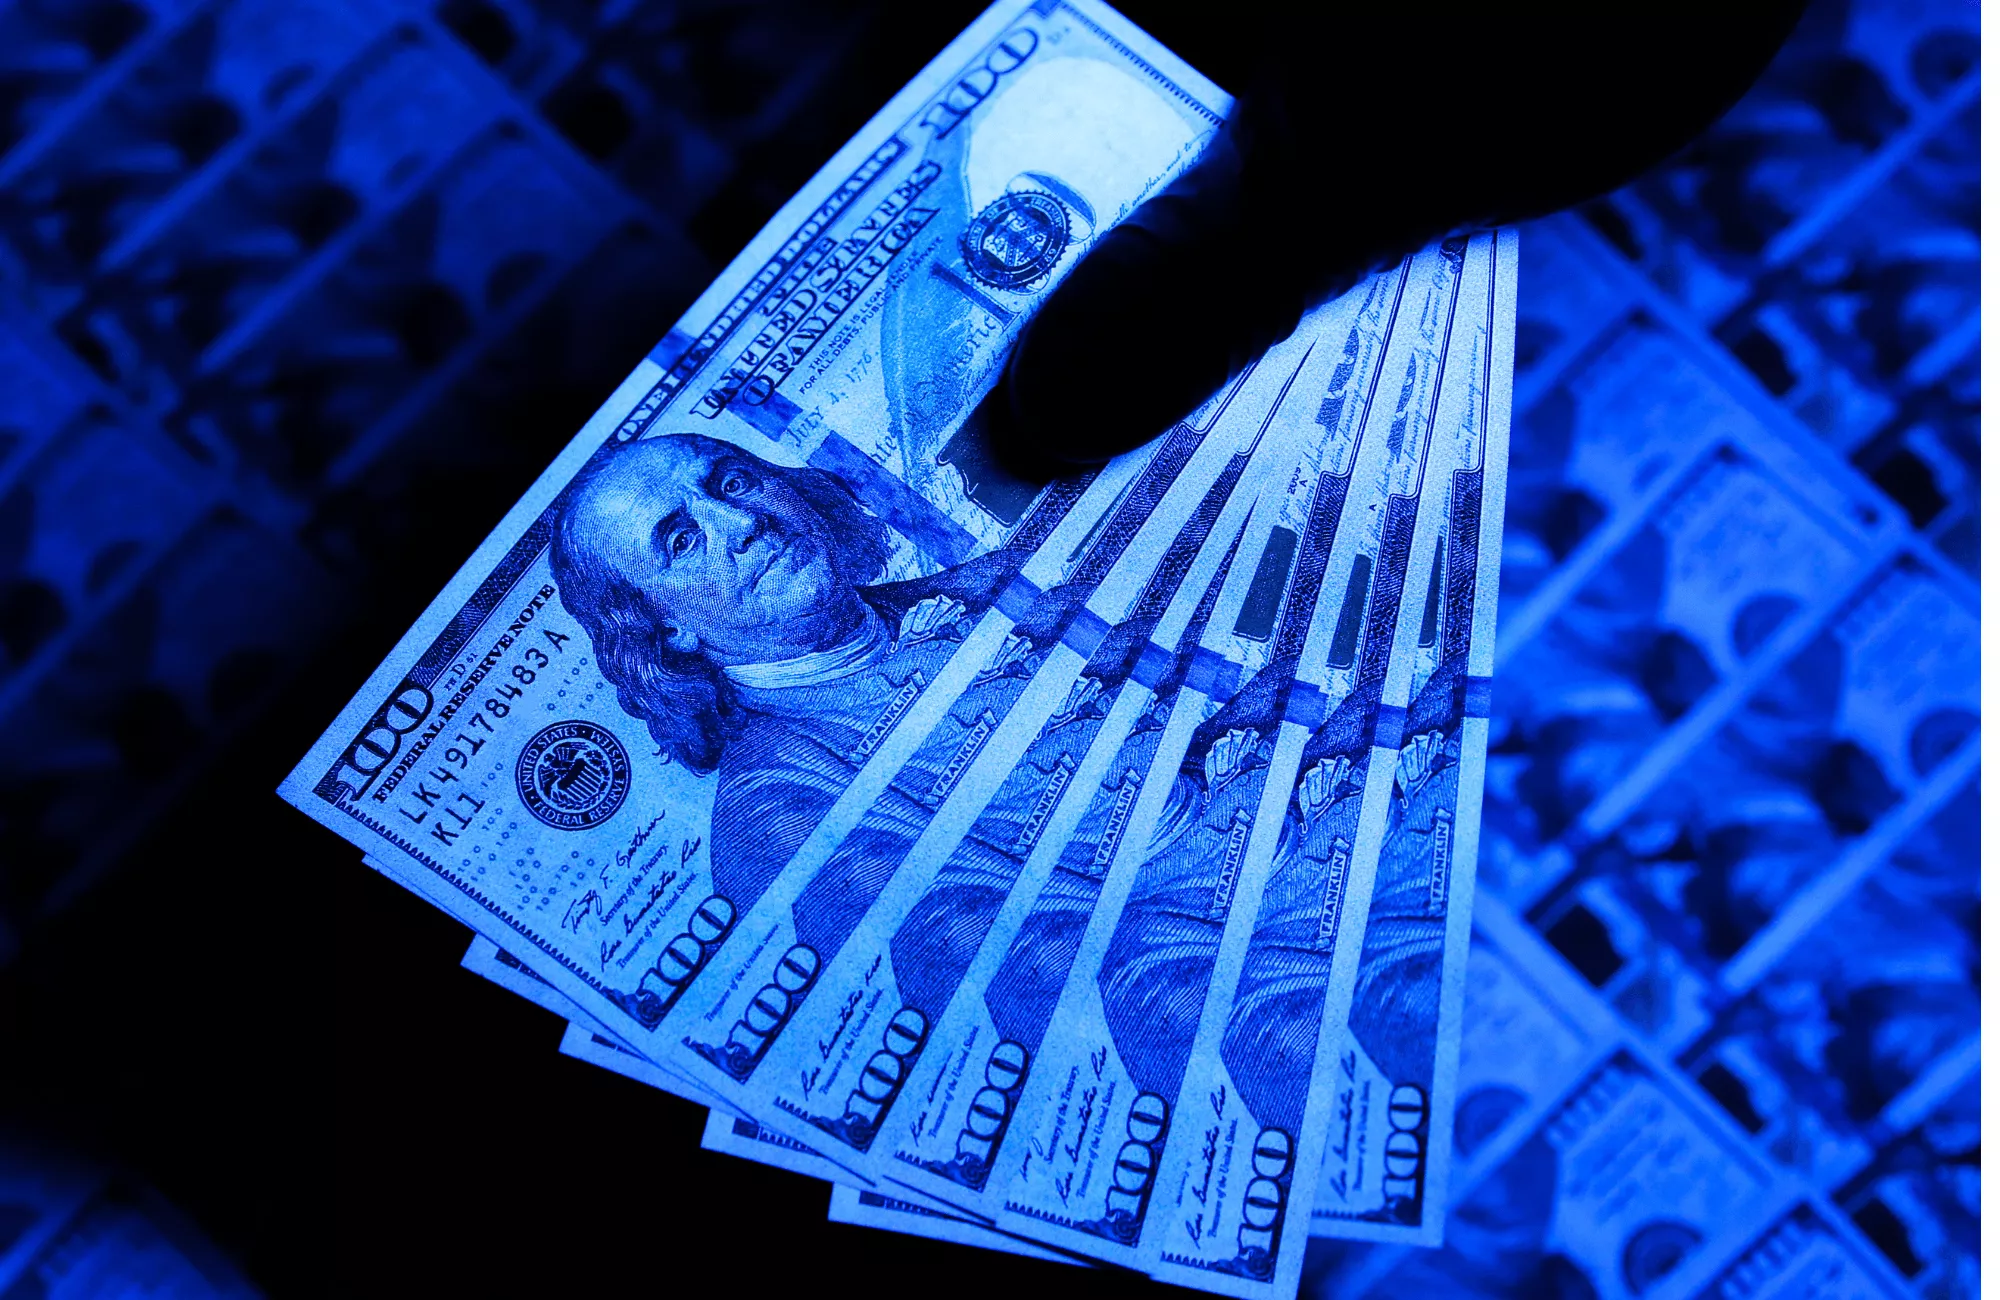 counterfeit money under UV light